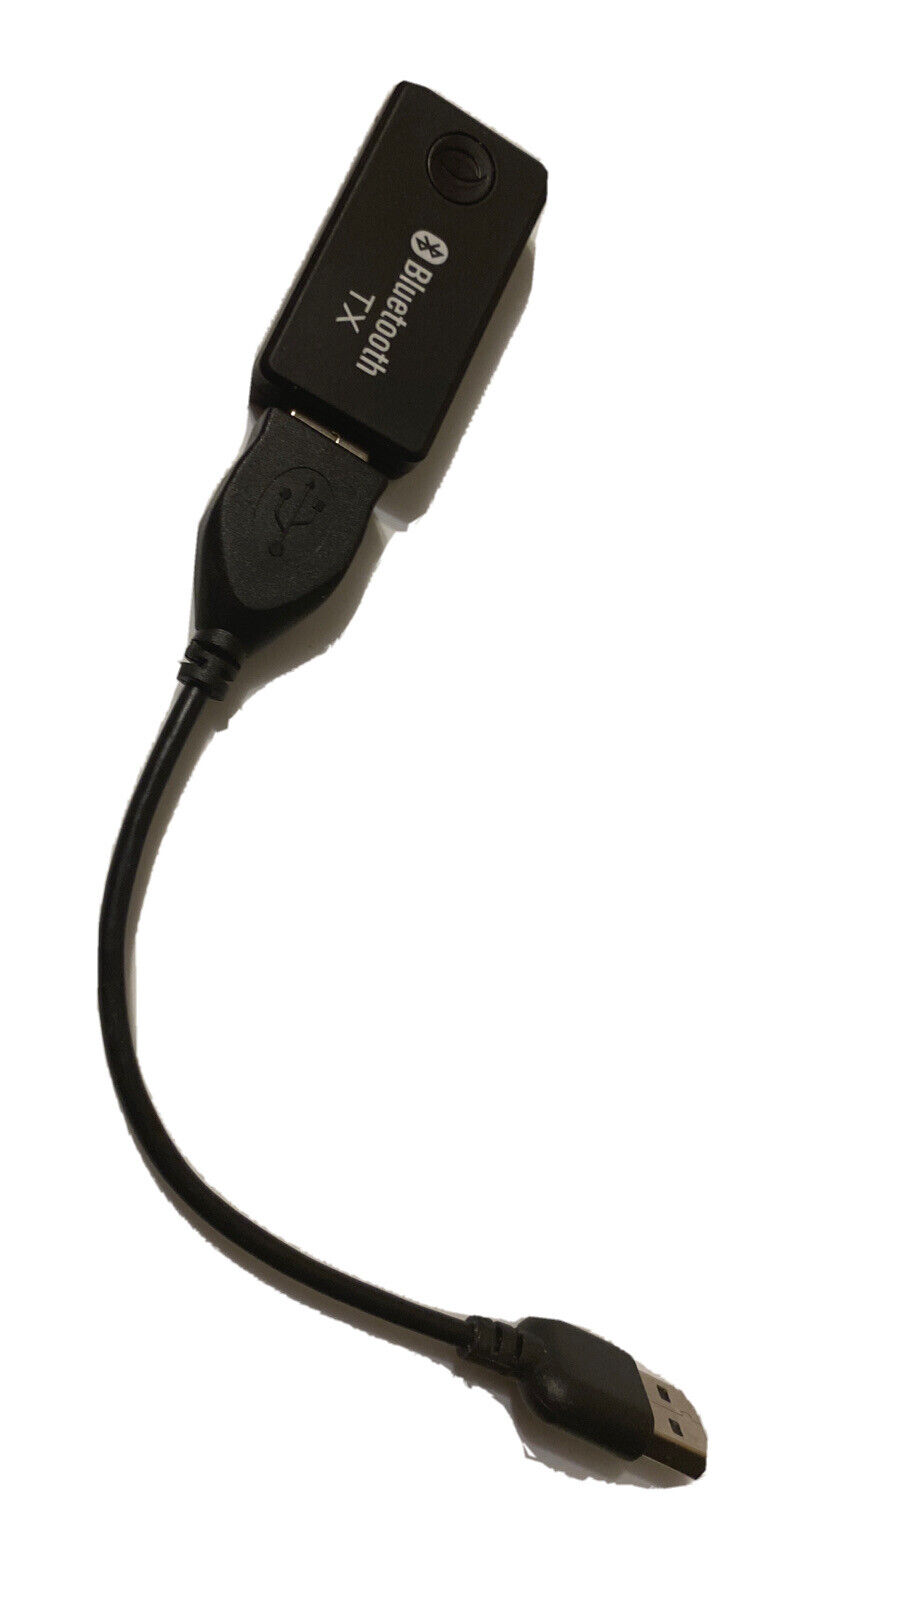 Bluetooth TX  Transmitter for TV PC, (3.5mm, RCA, Computer USB Digital Audio)